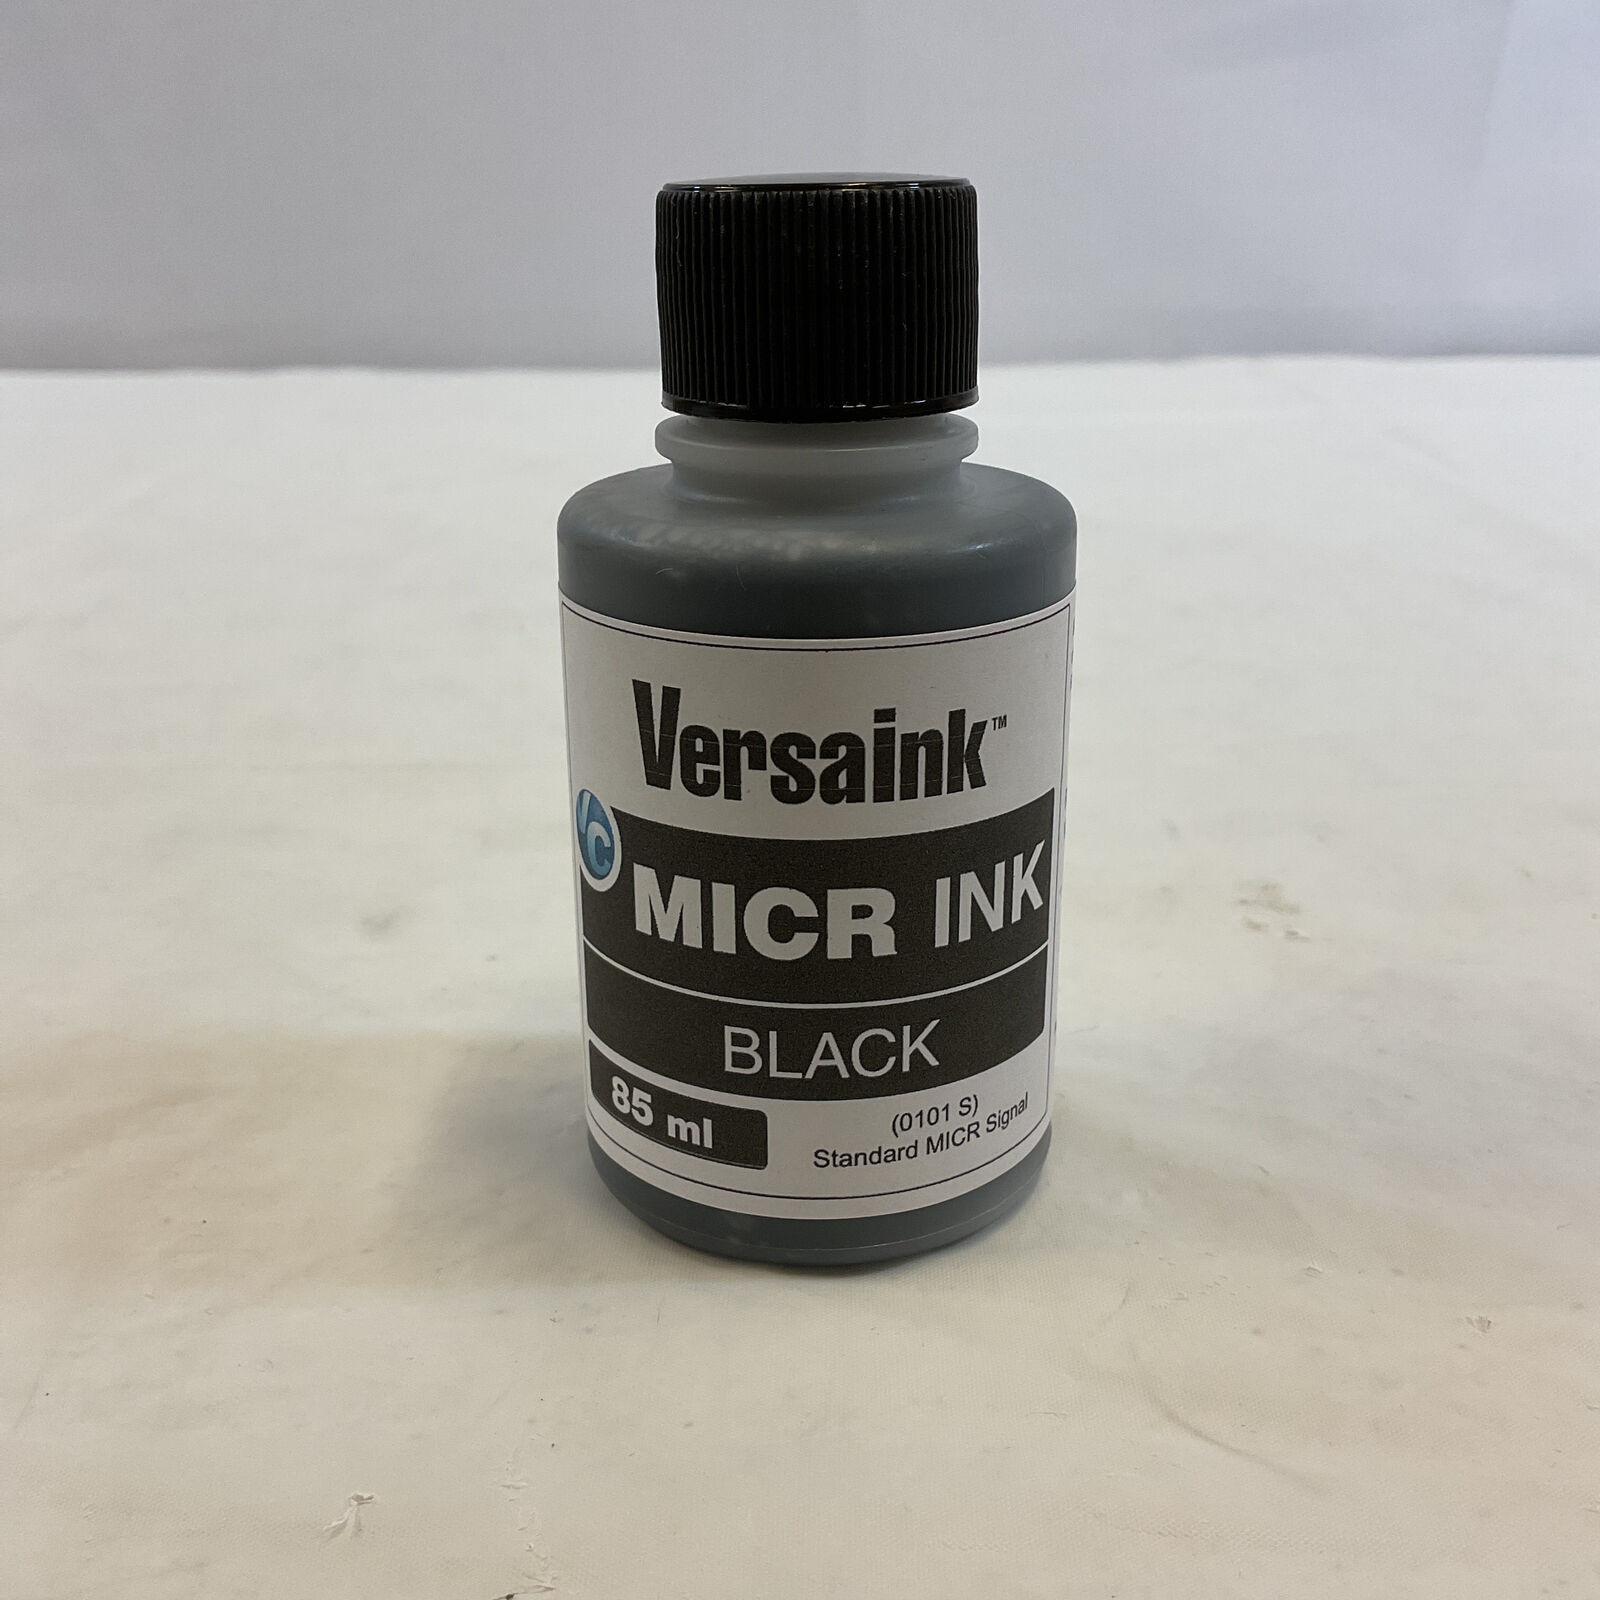 Versaink V0101S-7304 Black Standard MICR Signal Ink Size 85ml For Check Printers